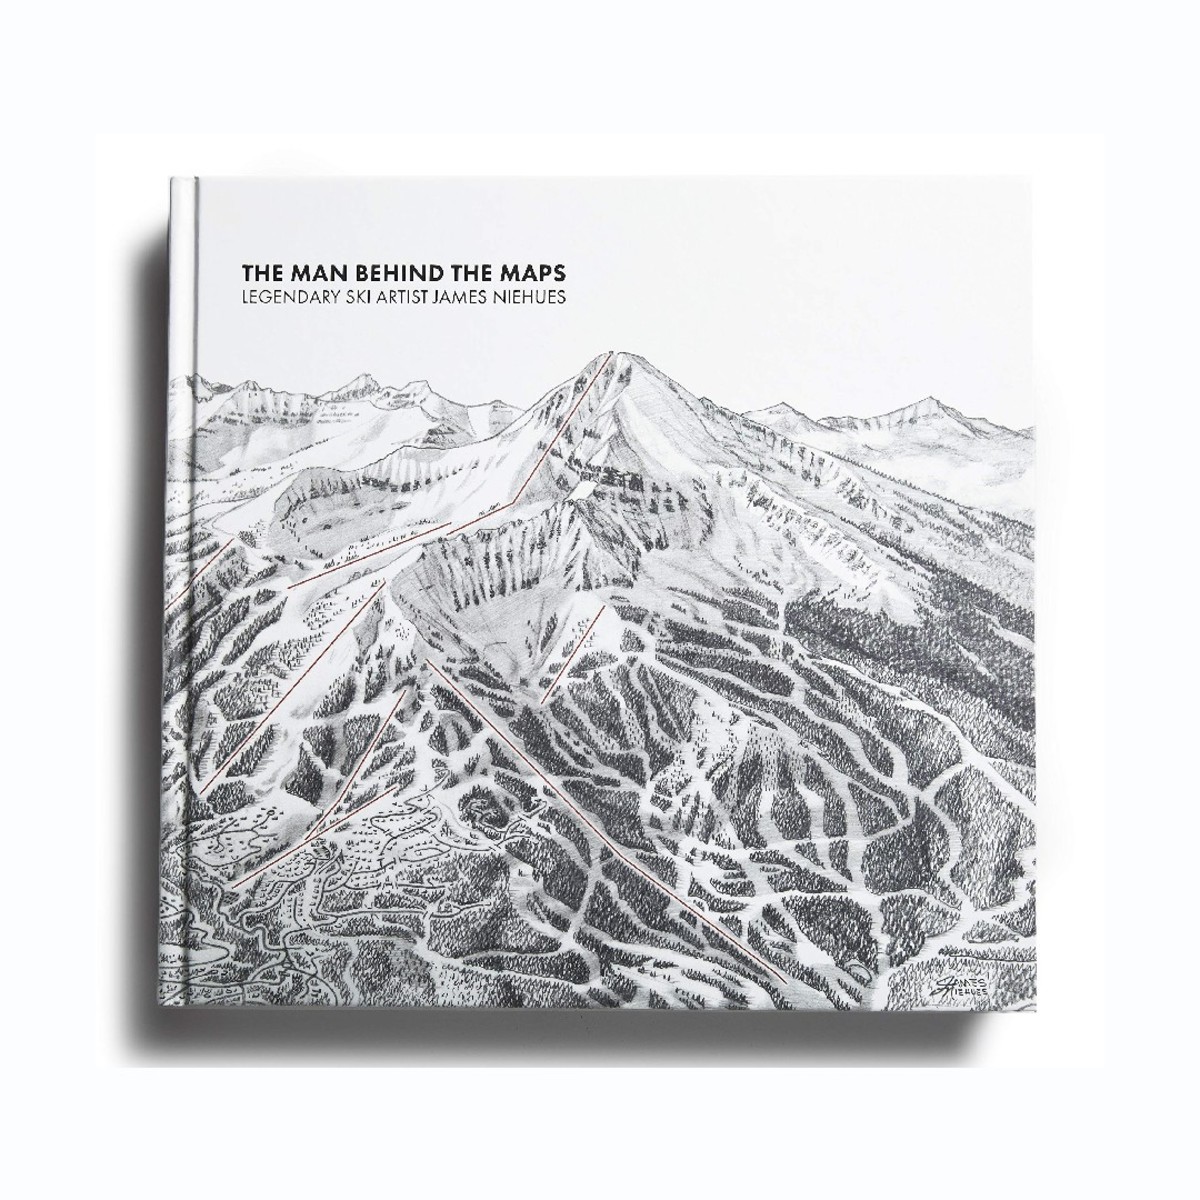 The Man Behind the Maps: Legendary Ski Artist James Niehues by Ben Farrow, Todd Bennett, and Jason Blevins)